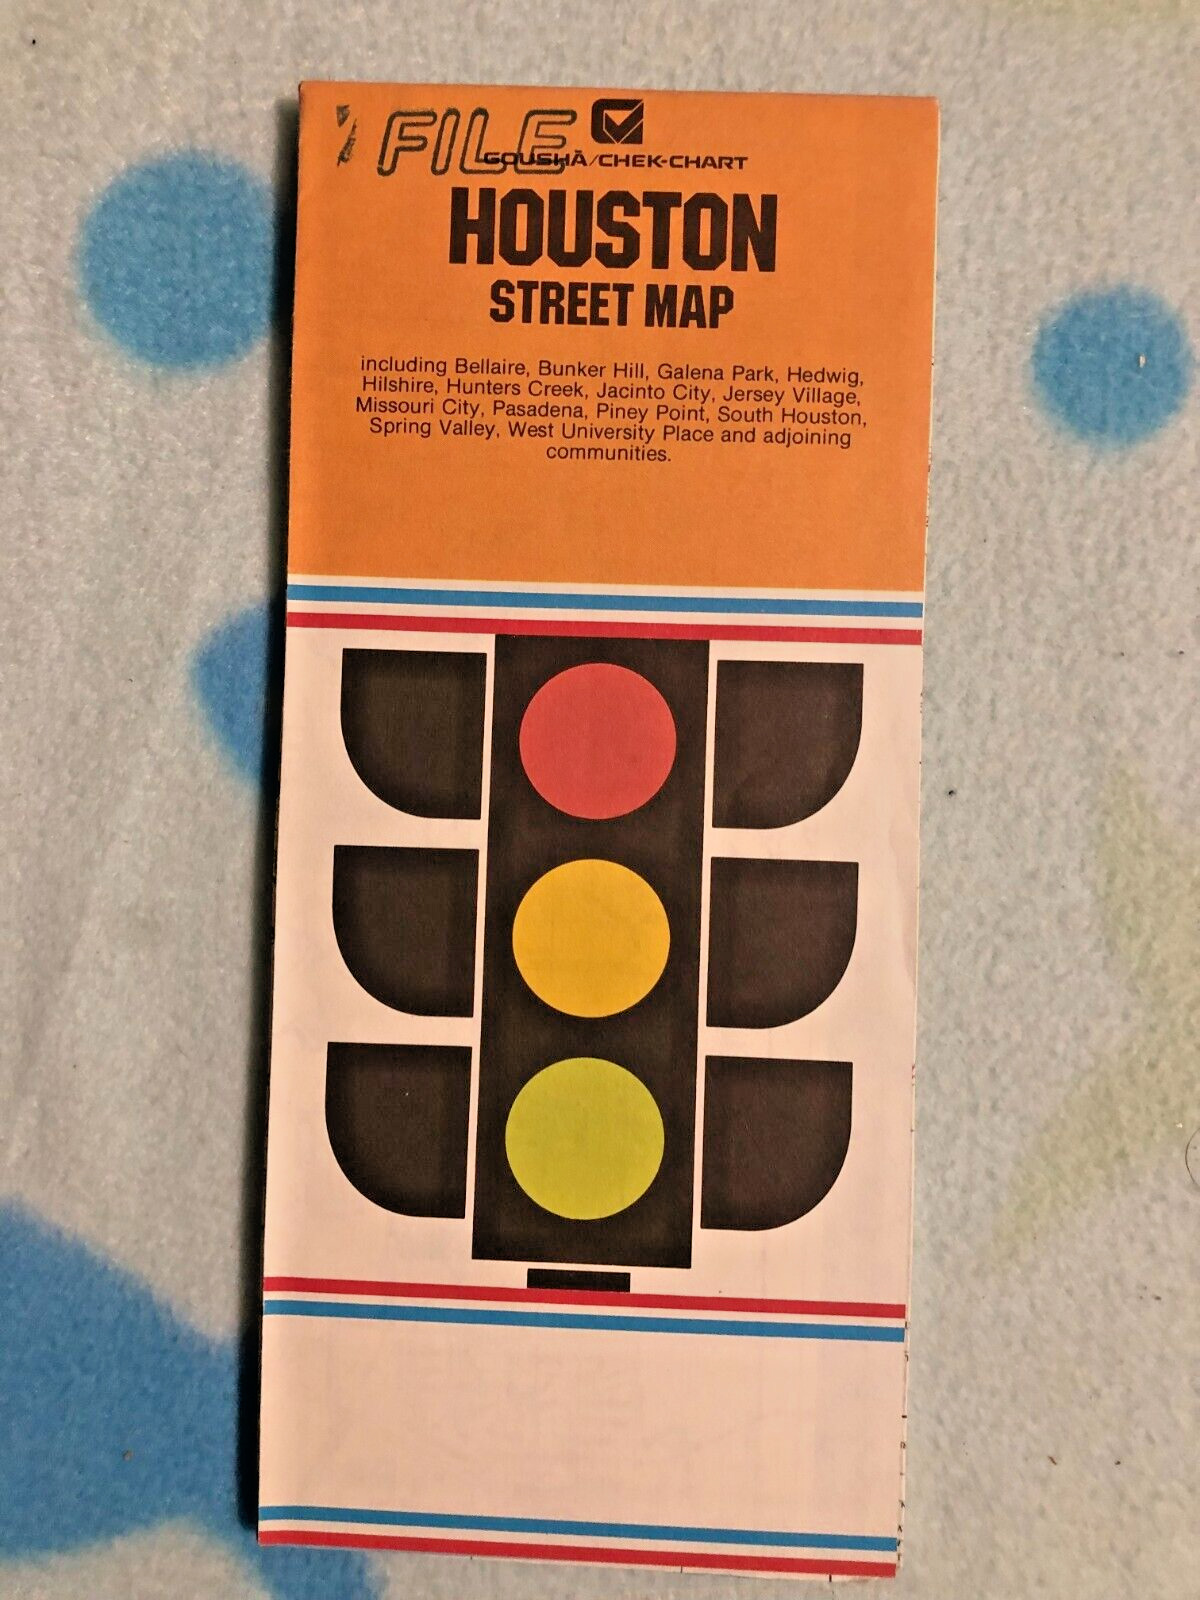 870 - Houston Street  Map - 1983 - 1985 Edition  - Gousha